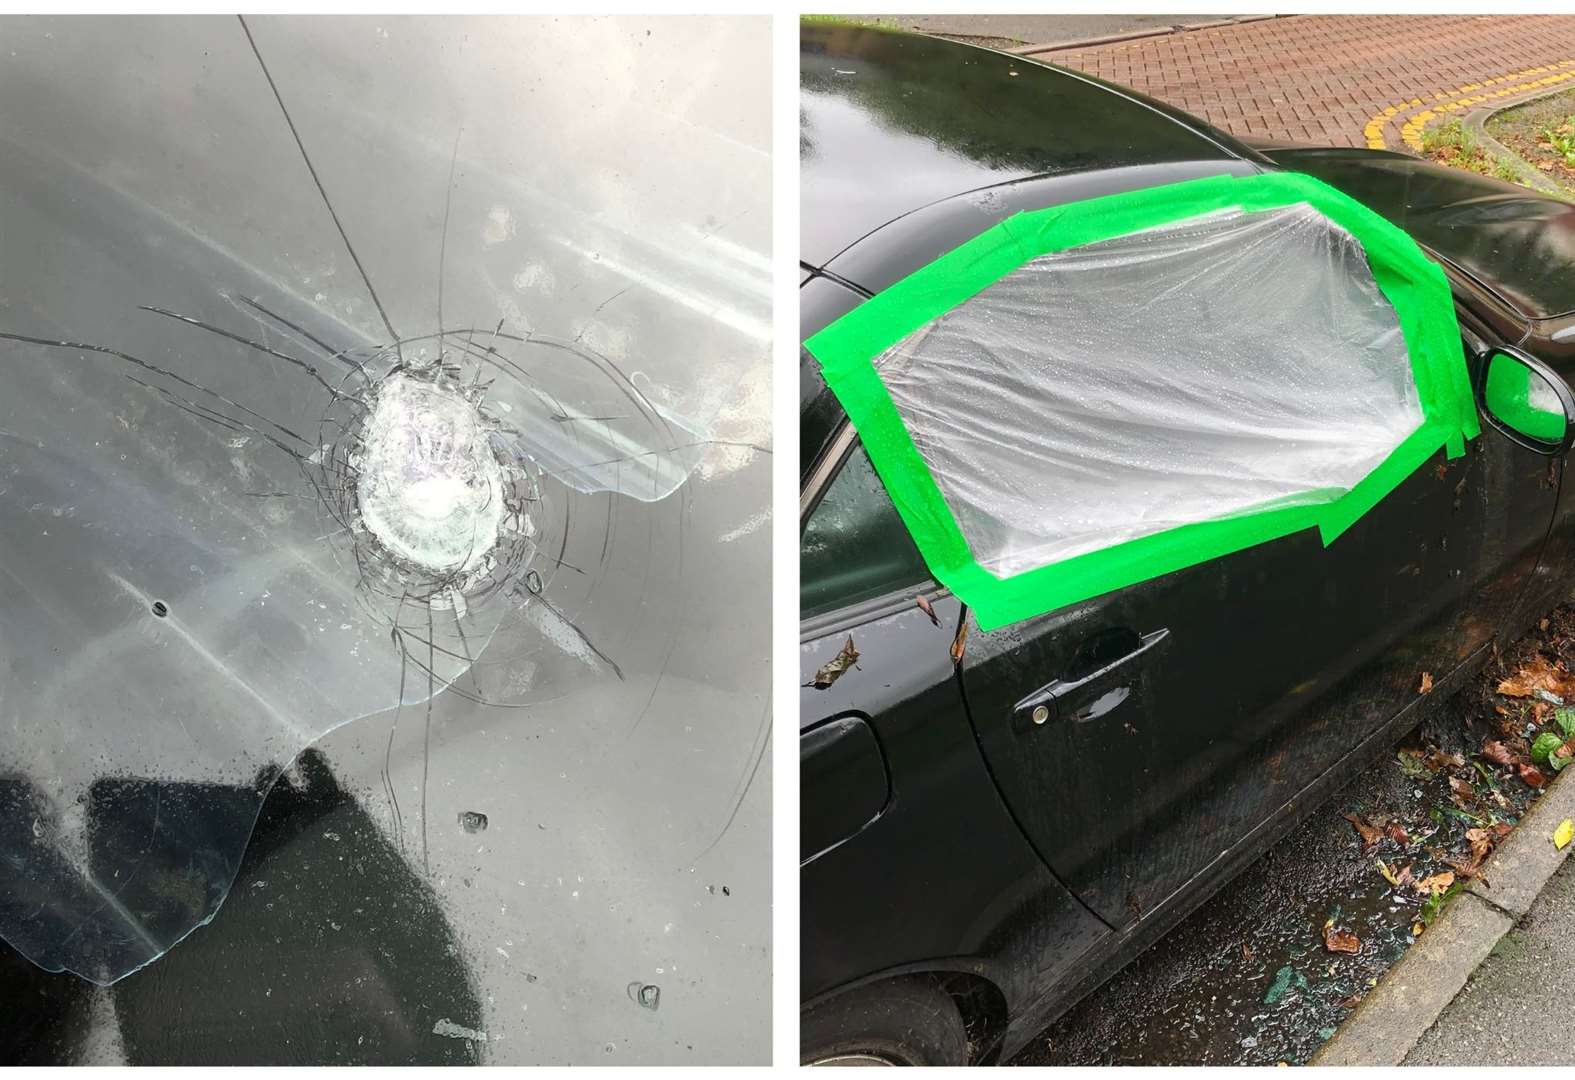 Kaca jendela Mercedes pecah di Hurst Road, Kennington, dekat Ashford